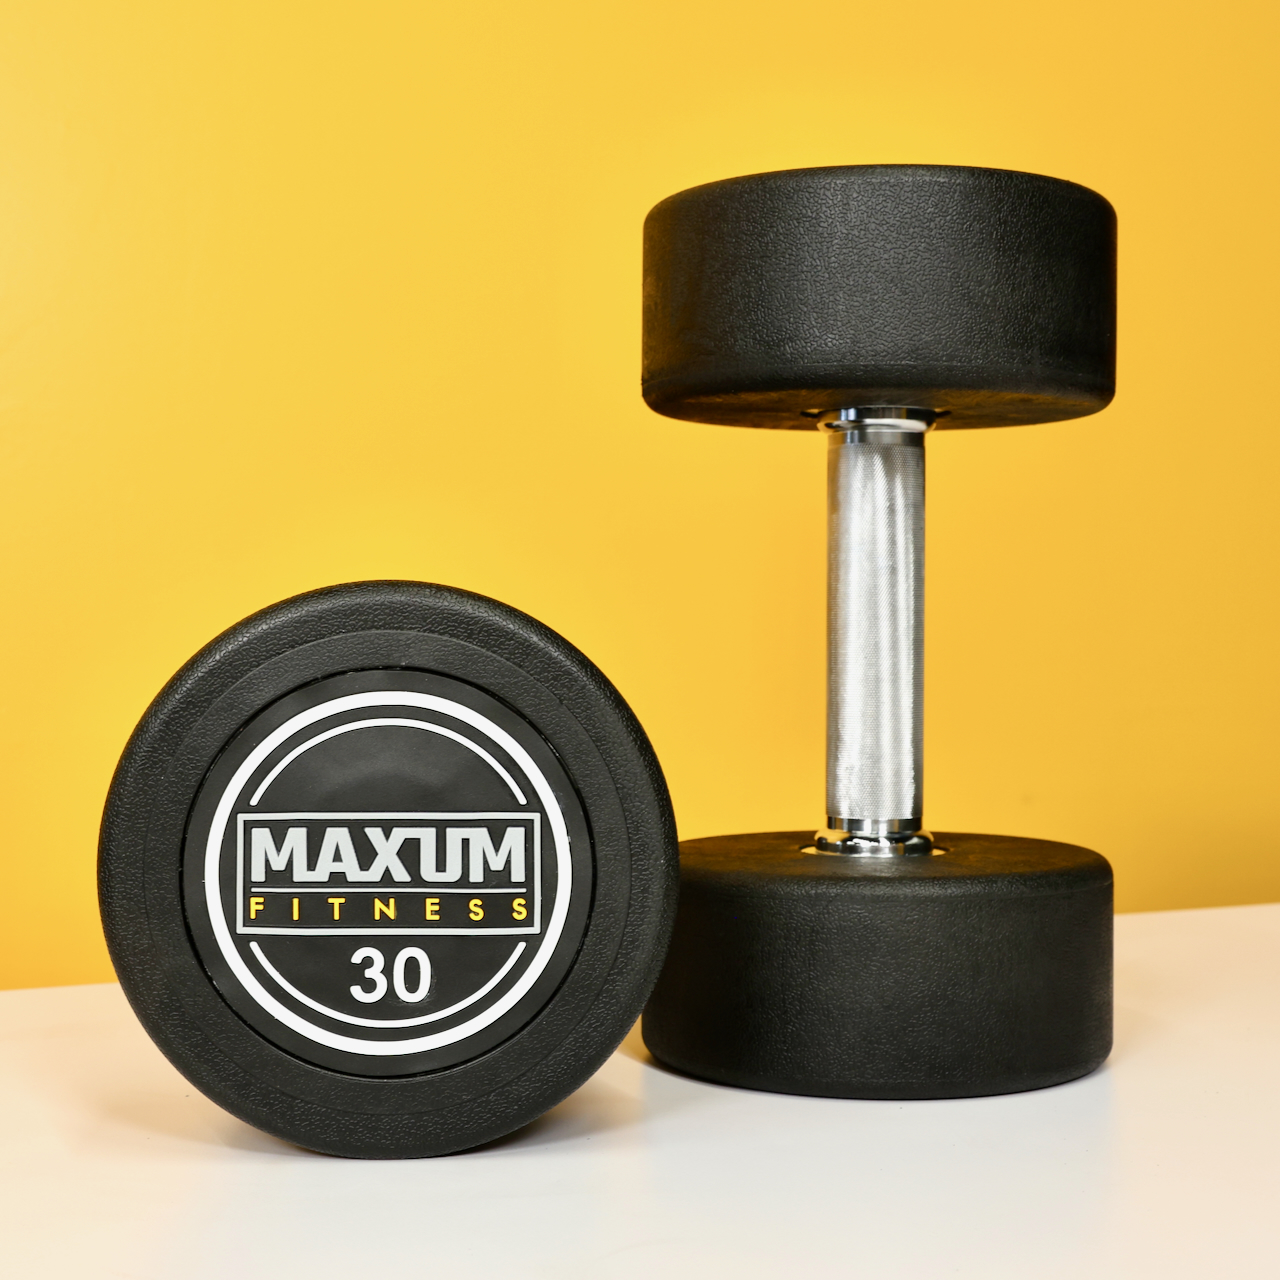 MAXUM fitness Round Urethane Dumbbells – 1